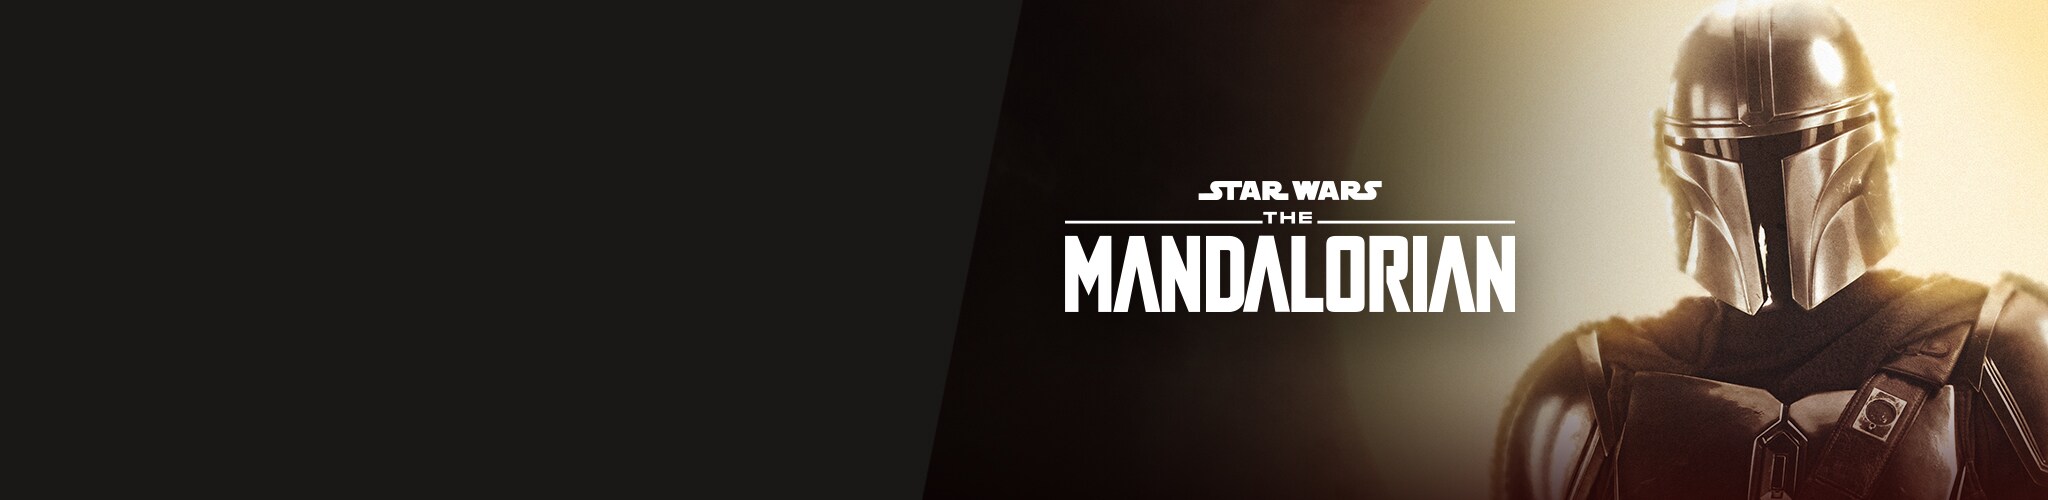 The Mandalorian - Season One banner